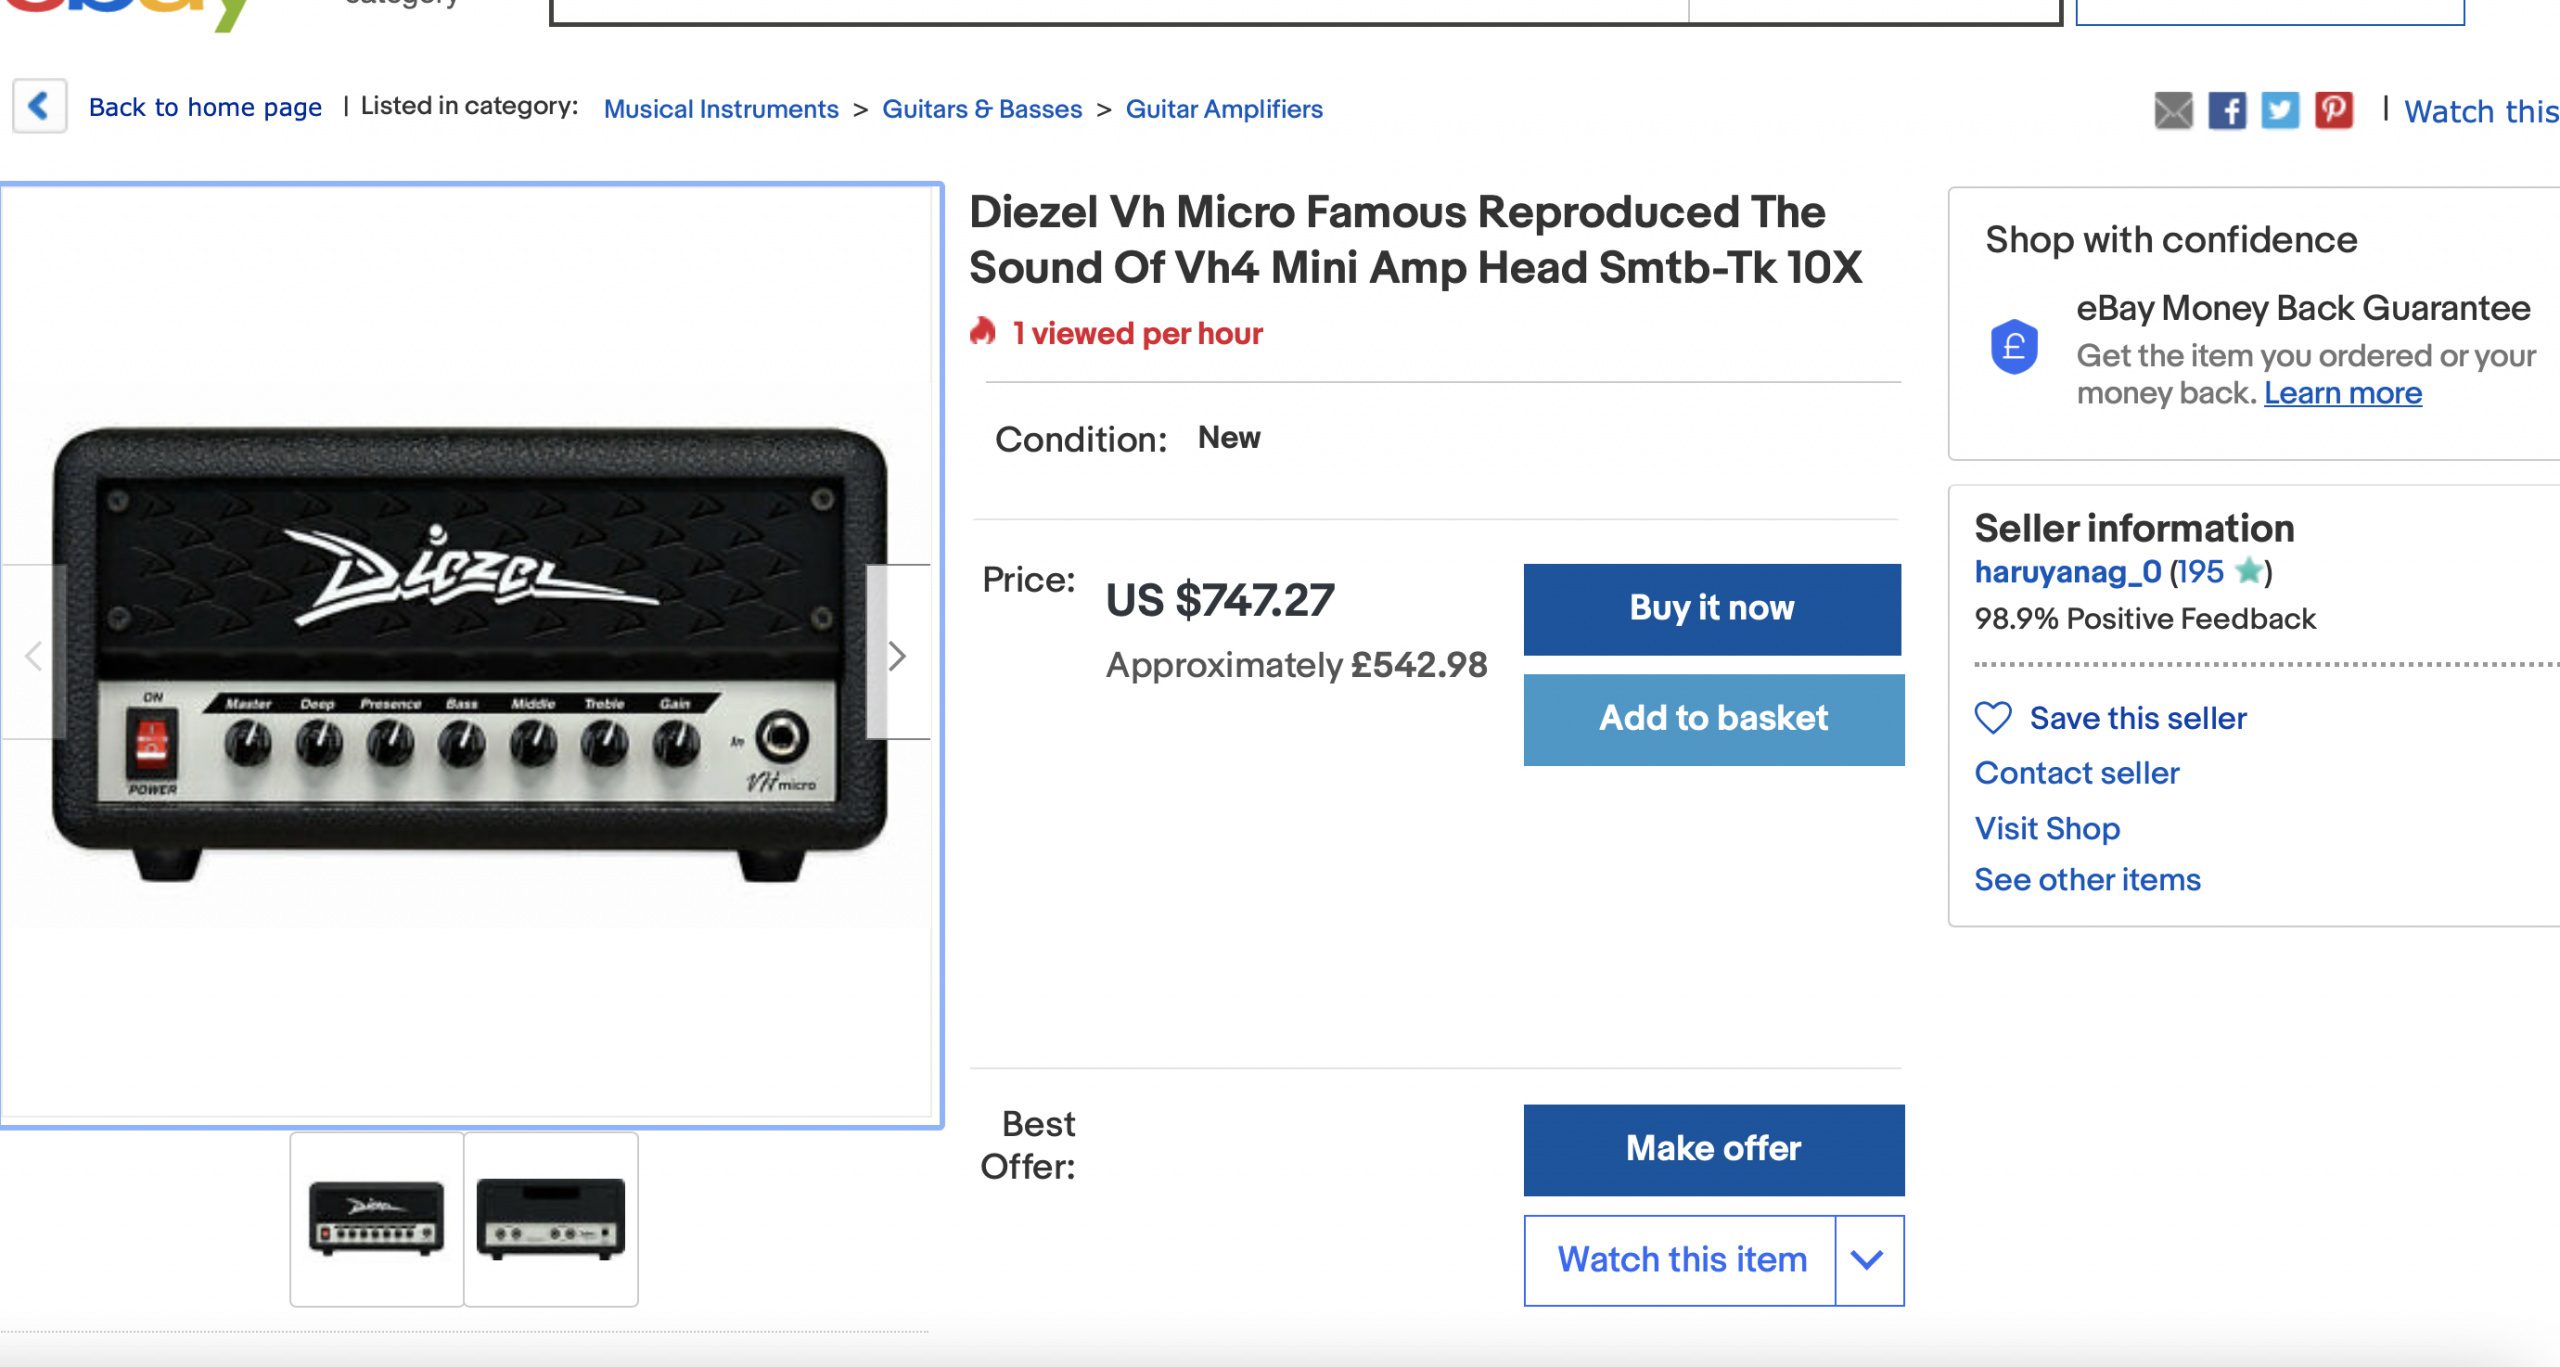 New Diezel Vh Micro on eBay